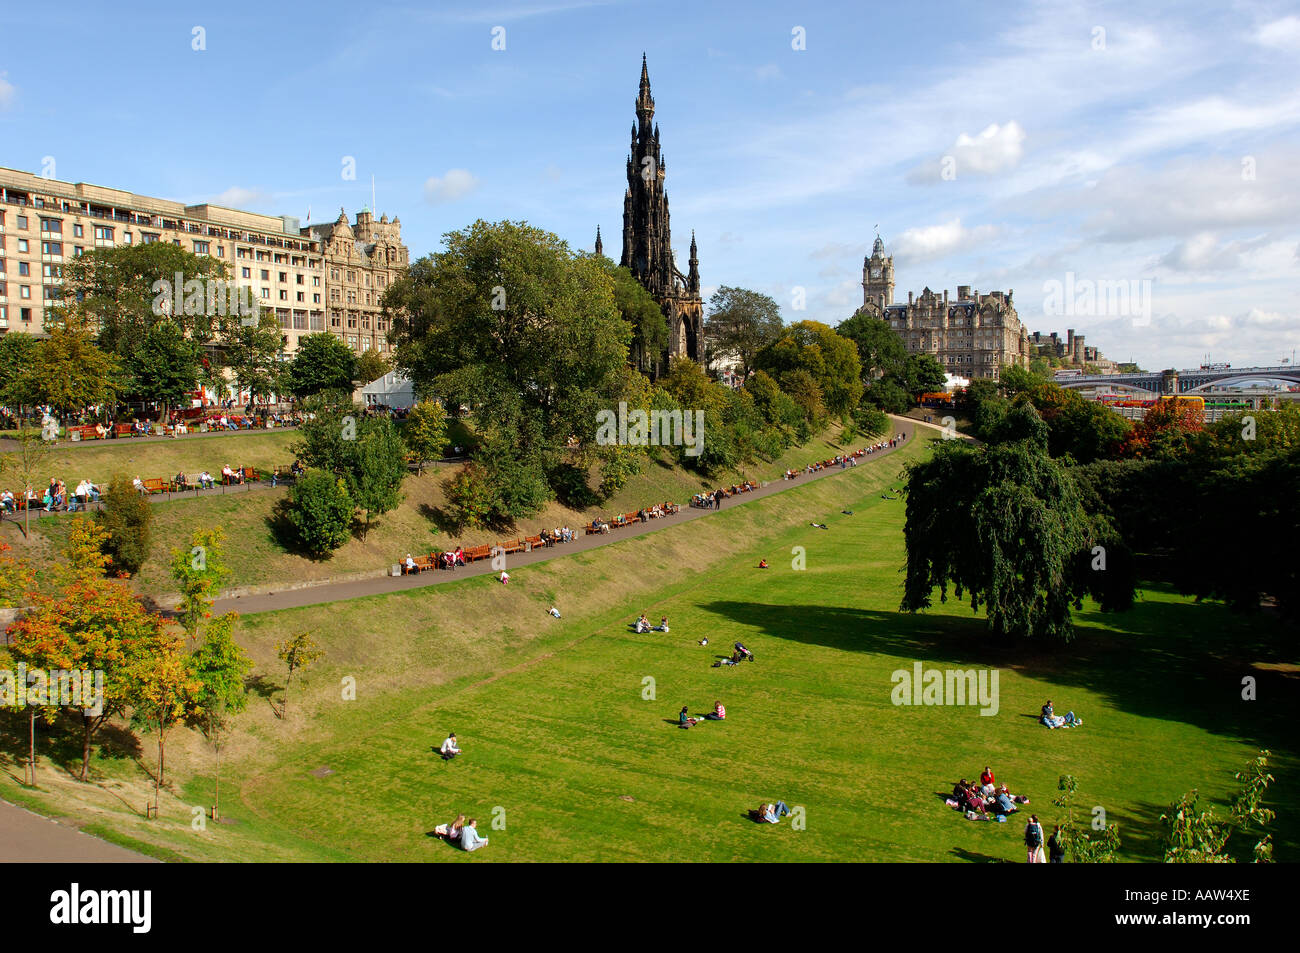 Princes Gardens city of Edinburgh bright sunshine people enjoying the gardens during luch hour Stock Photo